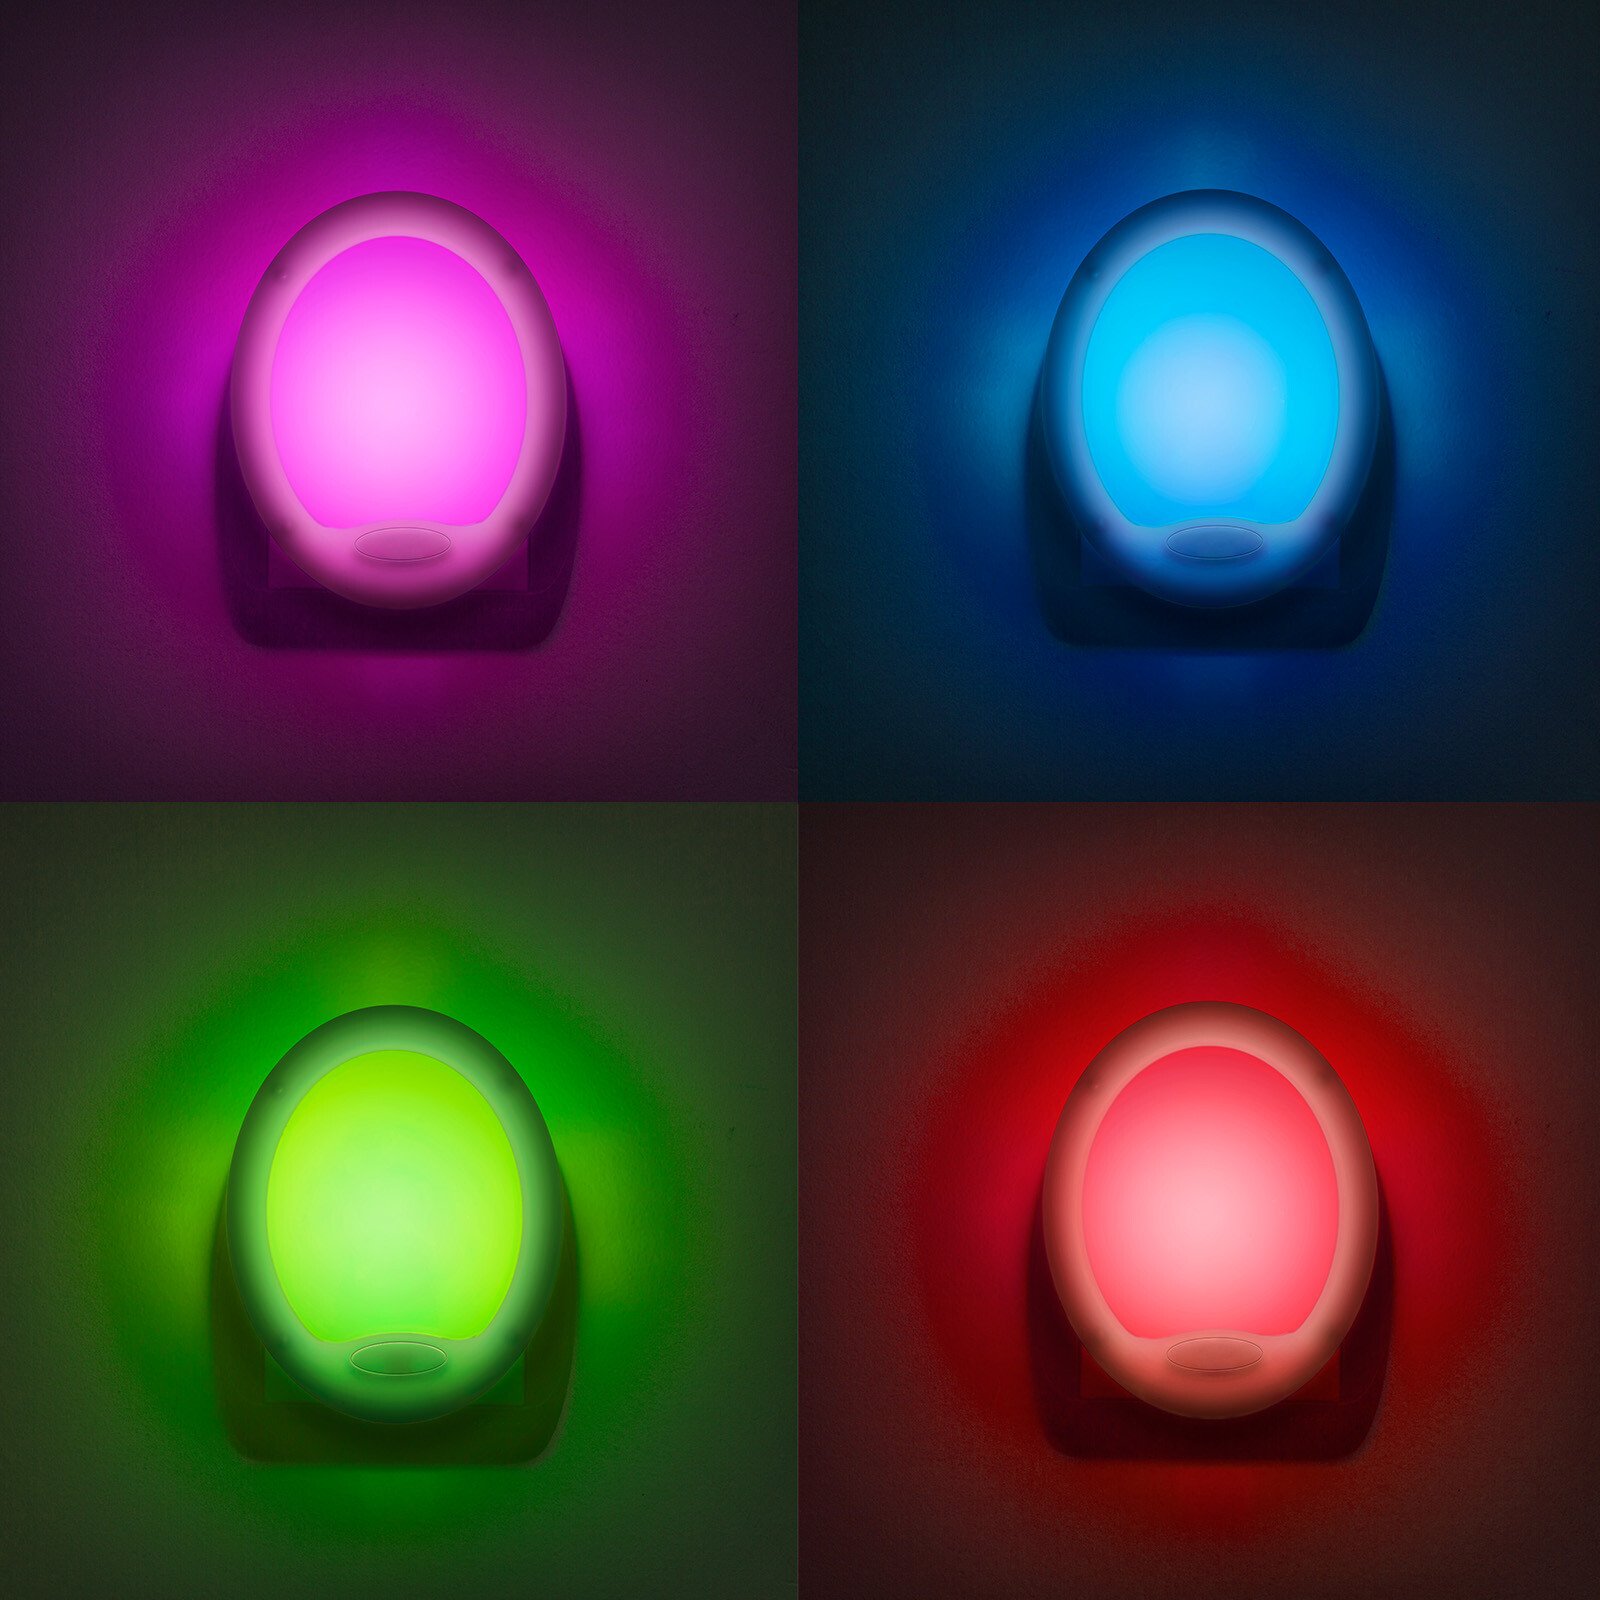 Lumina de veghe LED cu colori alternante Premium "Smooth" - 7 LED, 8x10cm thumb